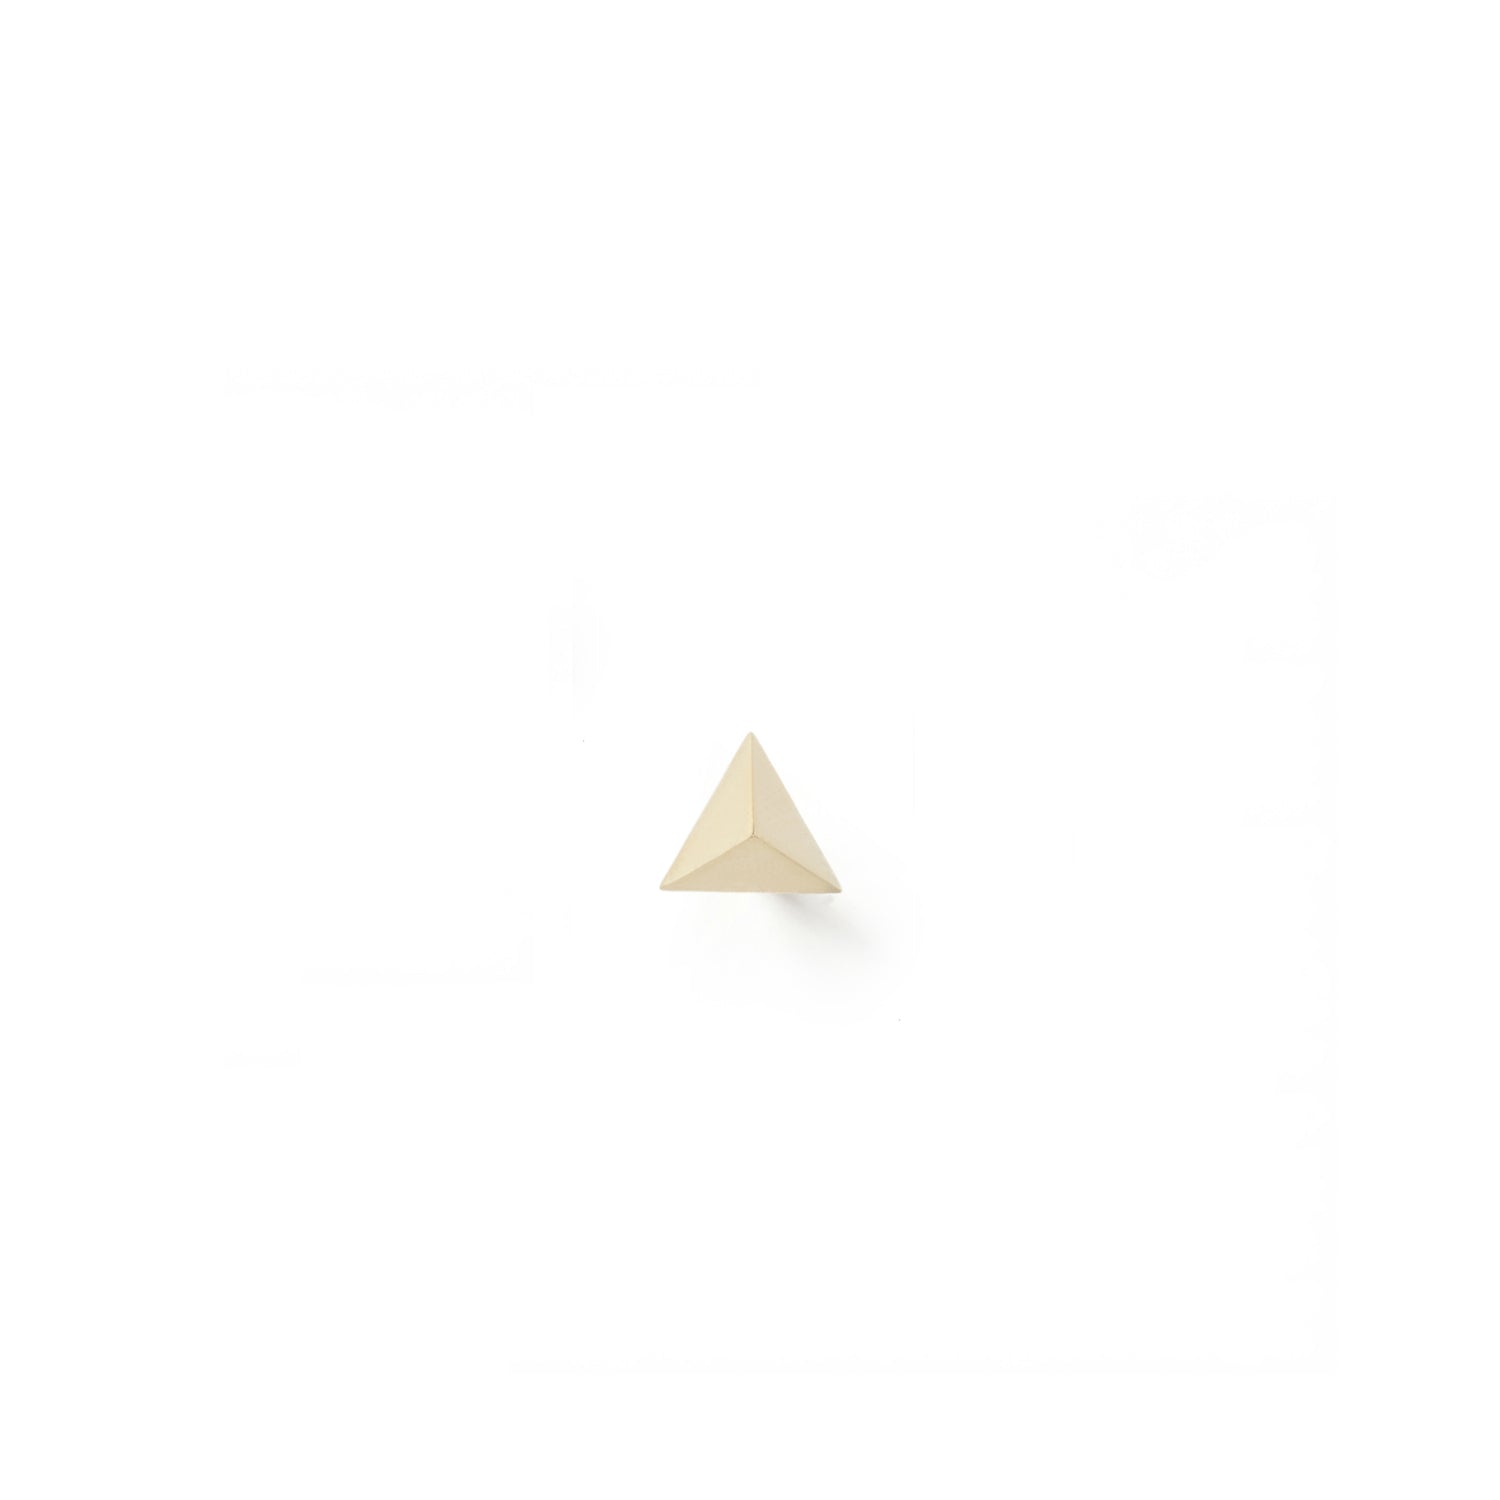 Single Tetrahedron Stud Earring - Gold